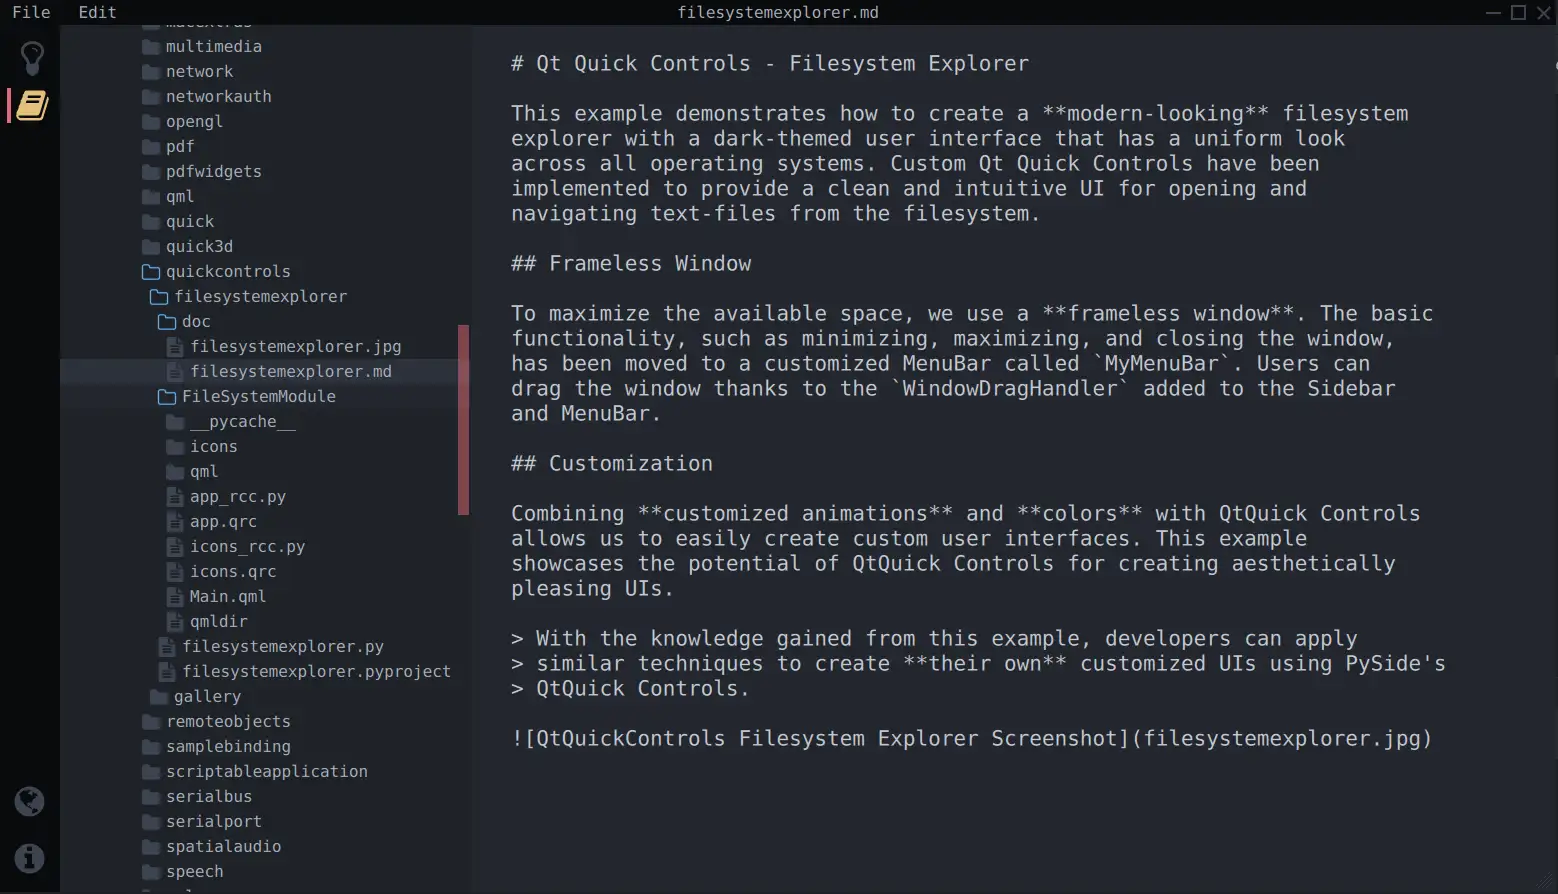 QtQuickControls Filesystem Explorer Screenshot